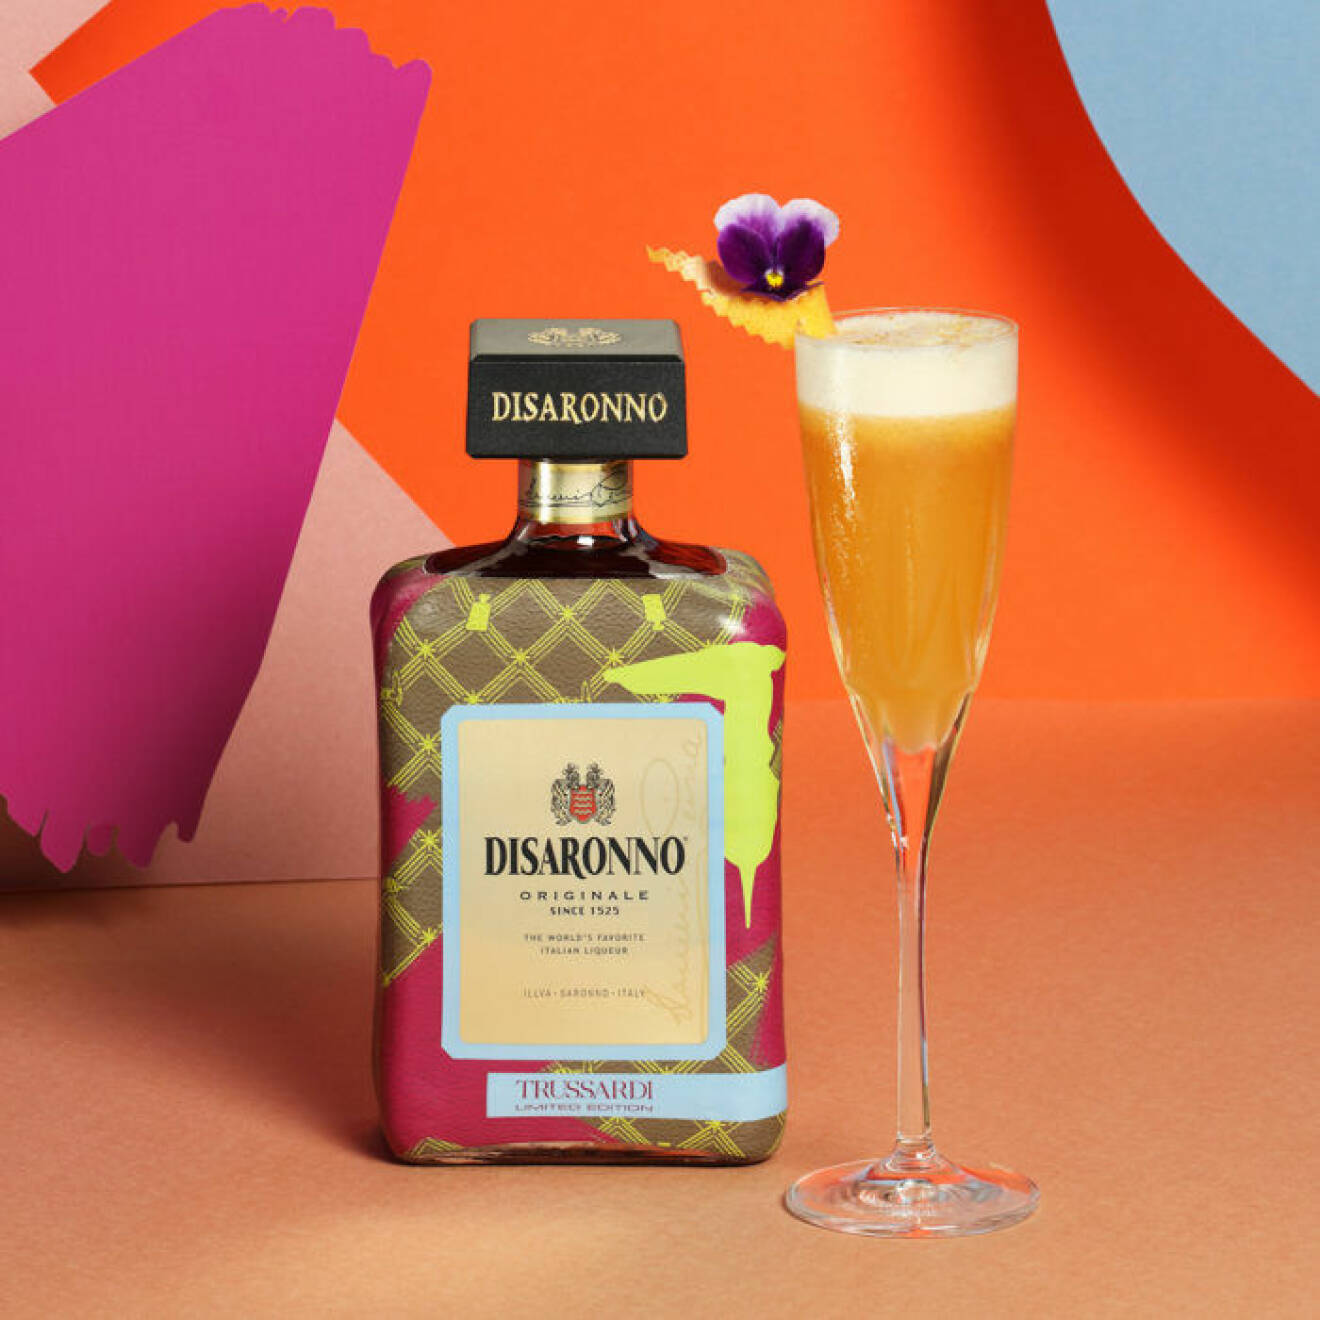 Disaronno wears Trussardi – the cocktail.